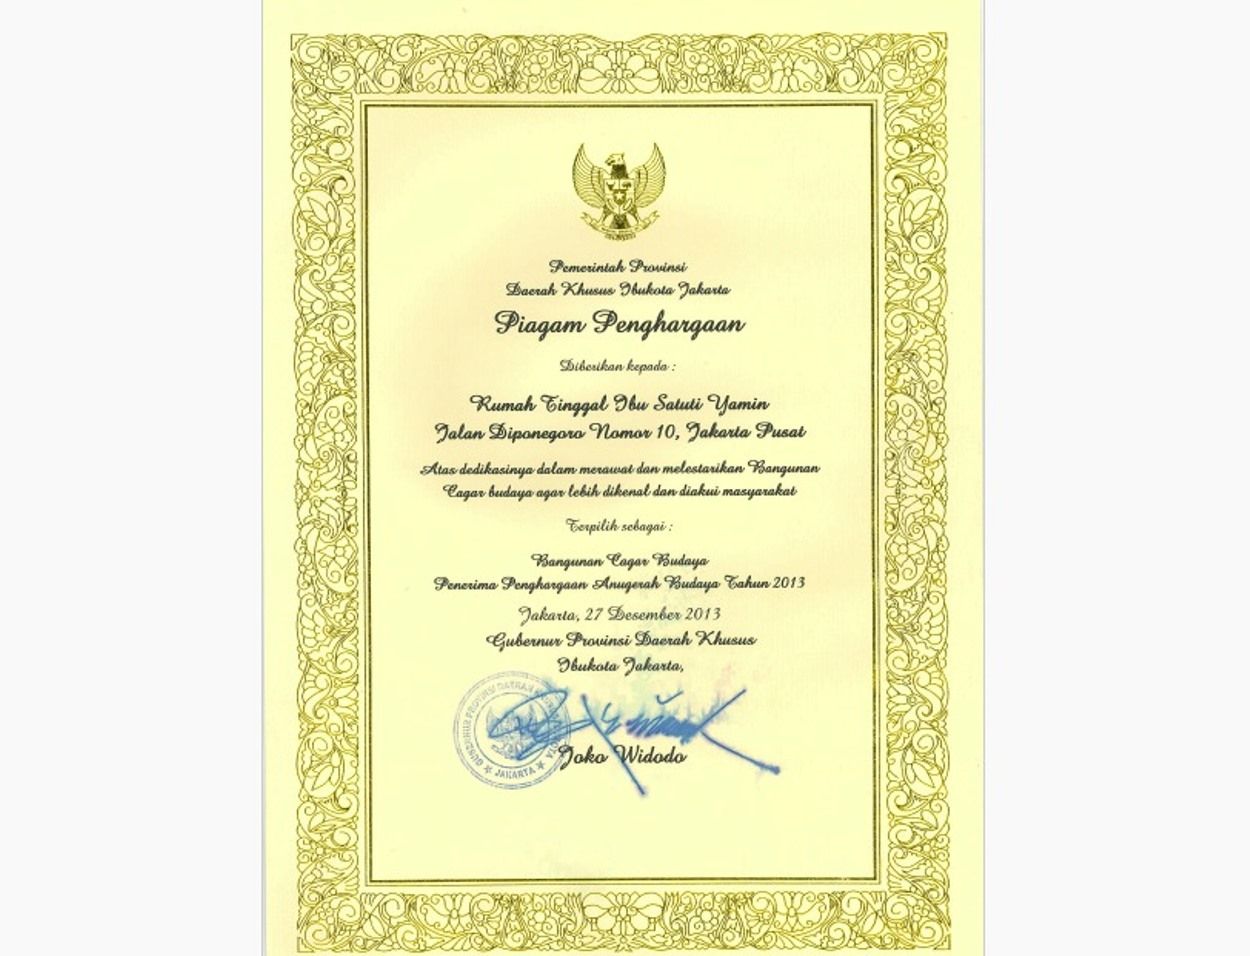 piagam penghargaan sebagai Anugerah Budaya Kategori Bangunan Cagar Budaya yang dikeluarkan oleh Joko Widodo selaku Gubernur Provinsi Daerah Khusus Ibukota Jakarta pada tahun 2013